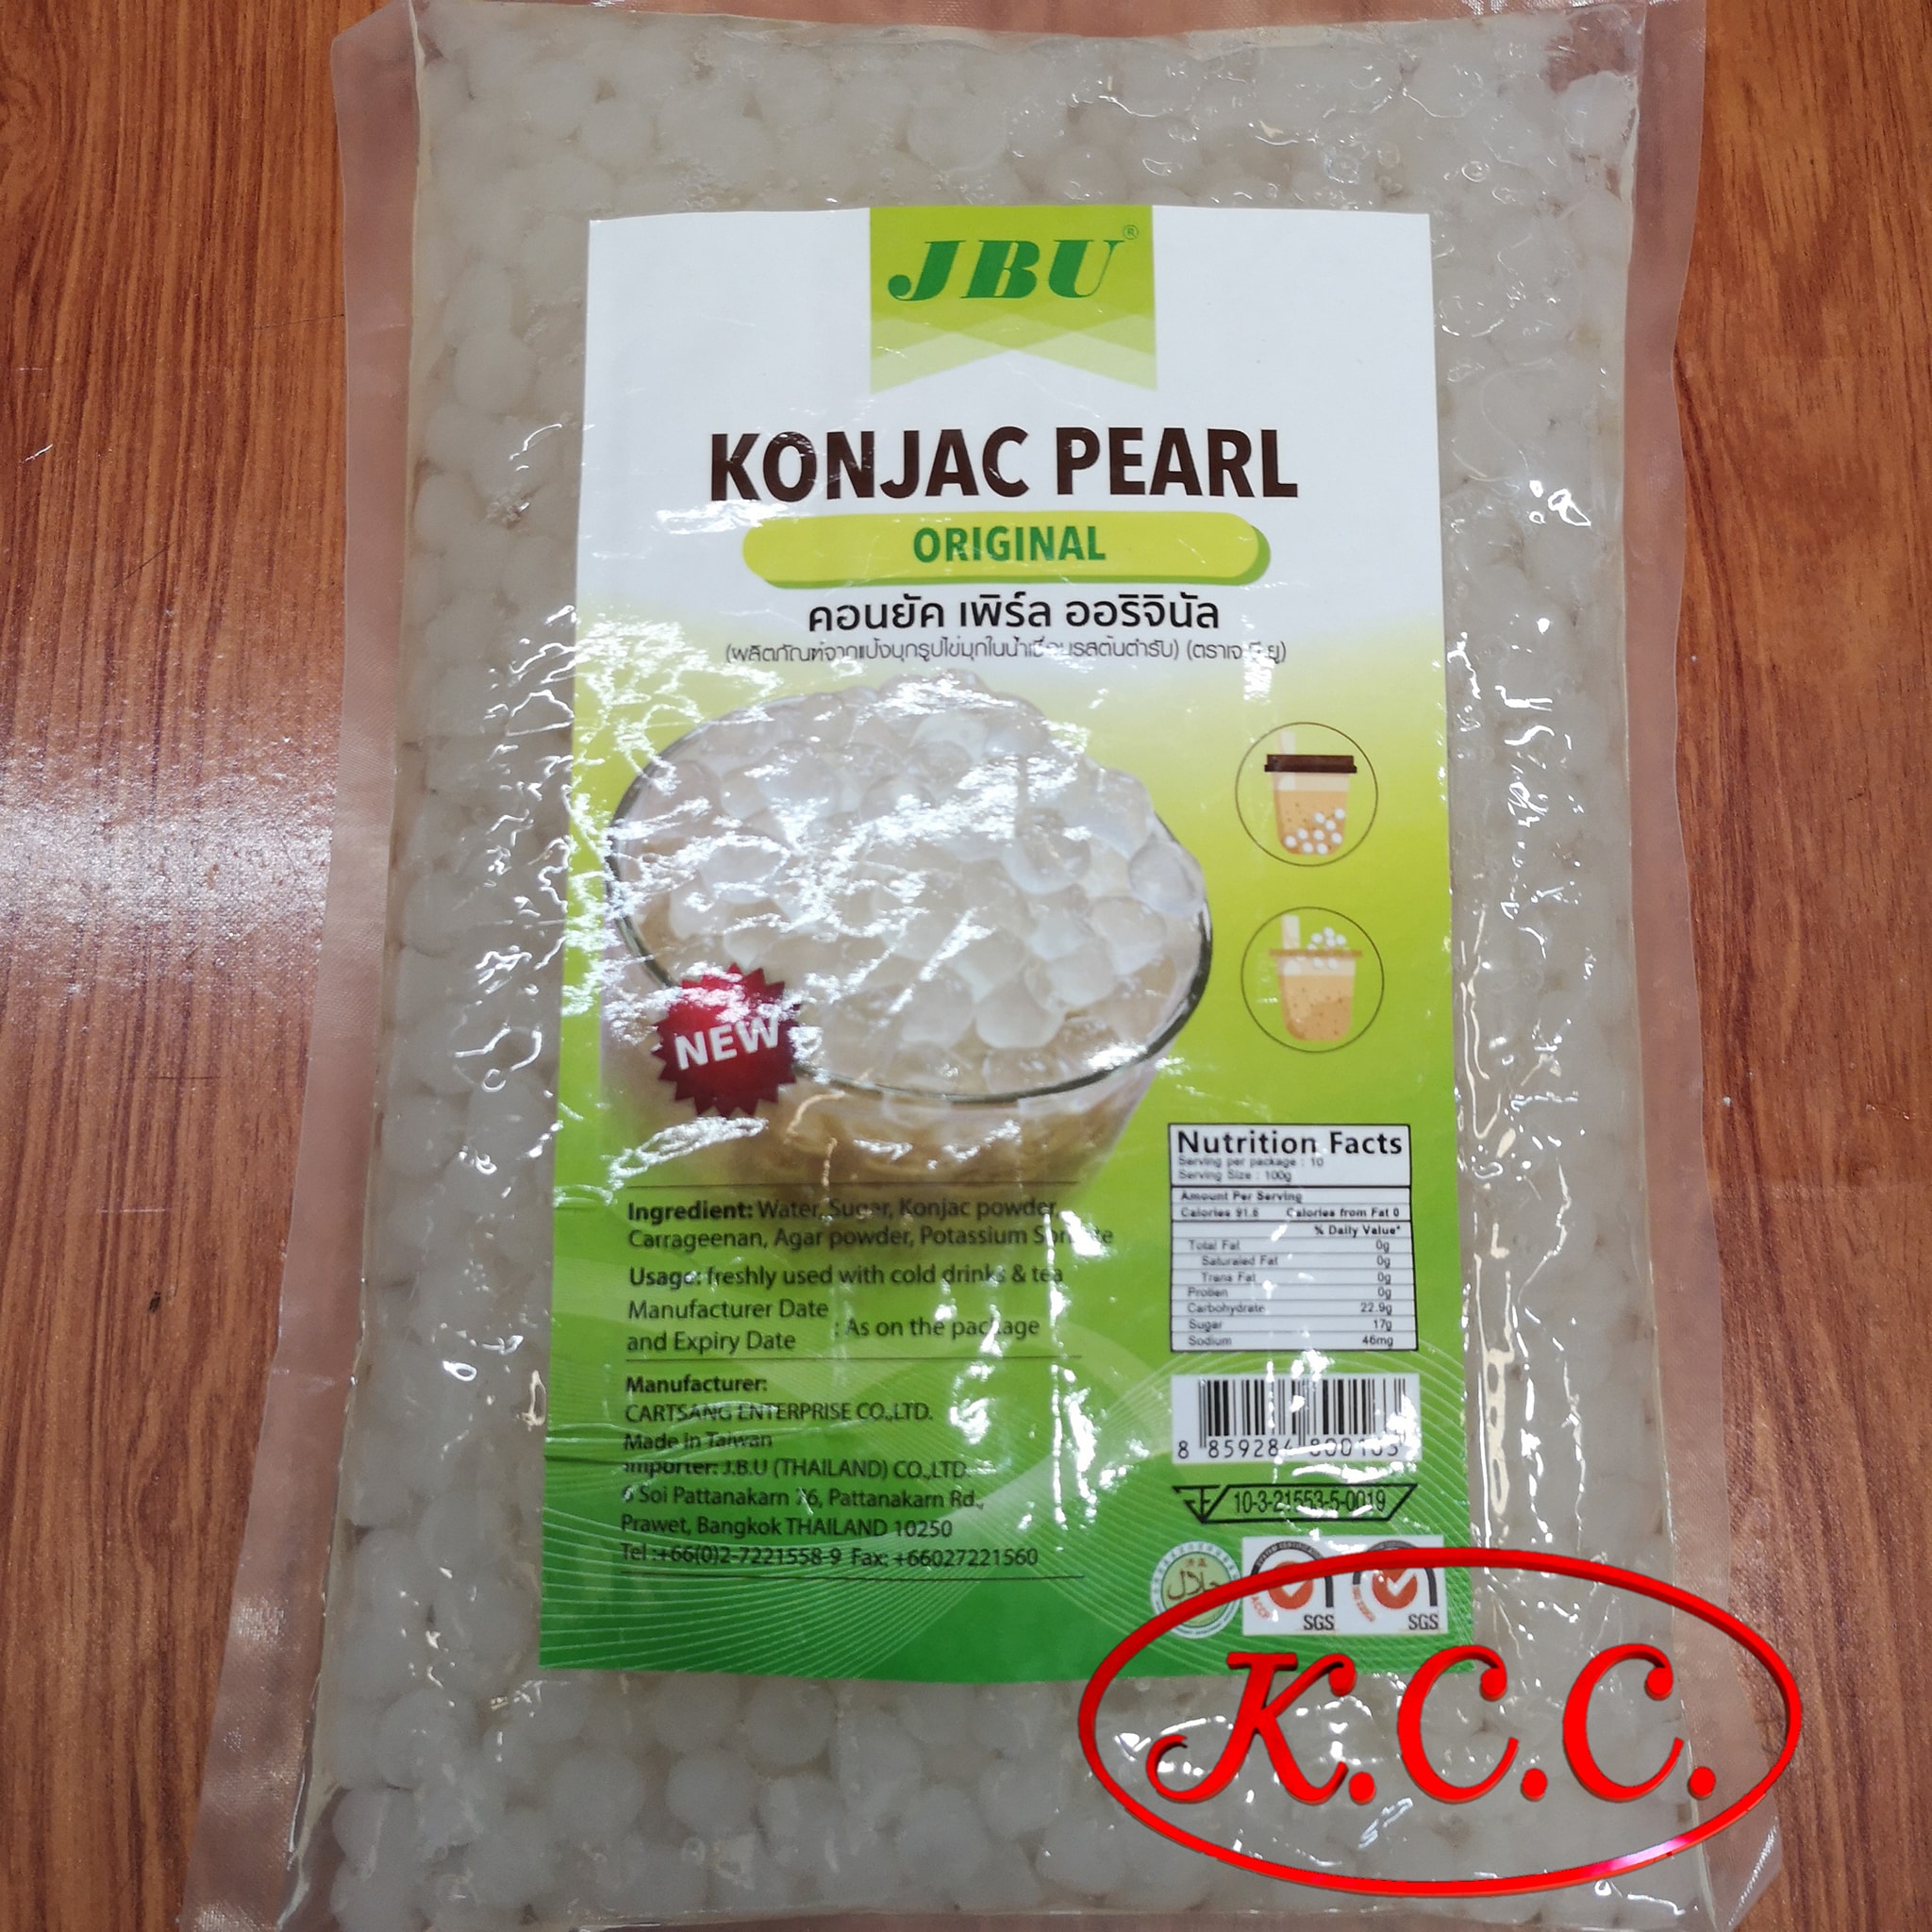 KCC คอนยัค เพิร์ล (มุกบุก) ออริจินอล ในน้ำเชื่อม รส ต้นตำหรับ Conjac Pearl Original ของ JBU 1000 กรัม / 1 กิโล ถ่ายจากสินค้าจริง